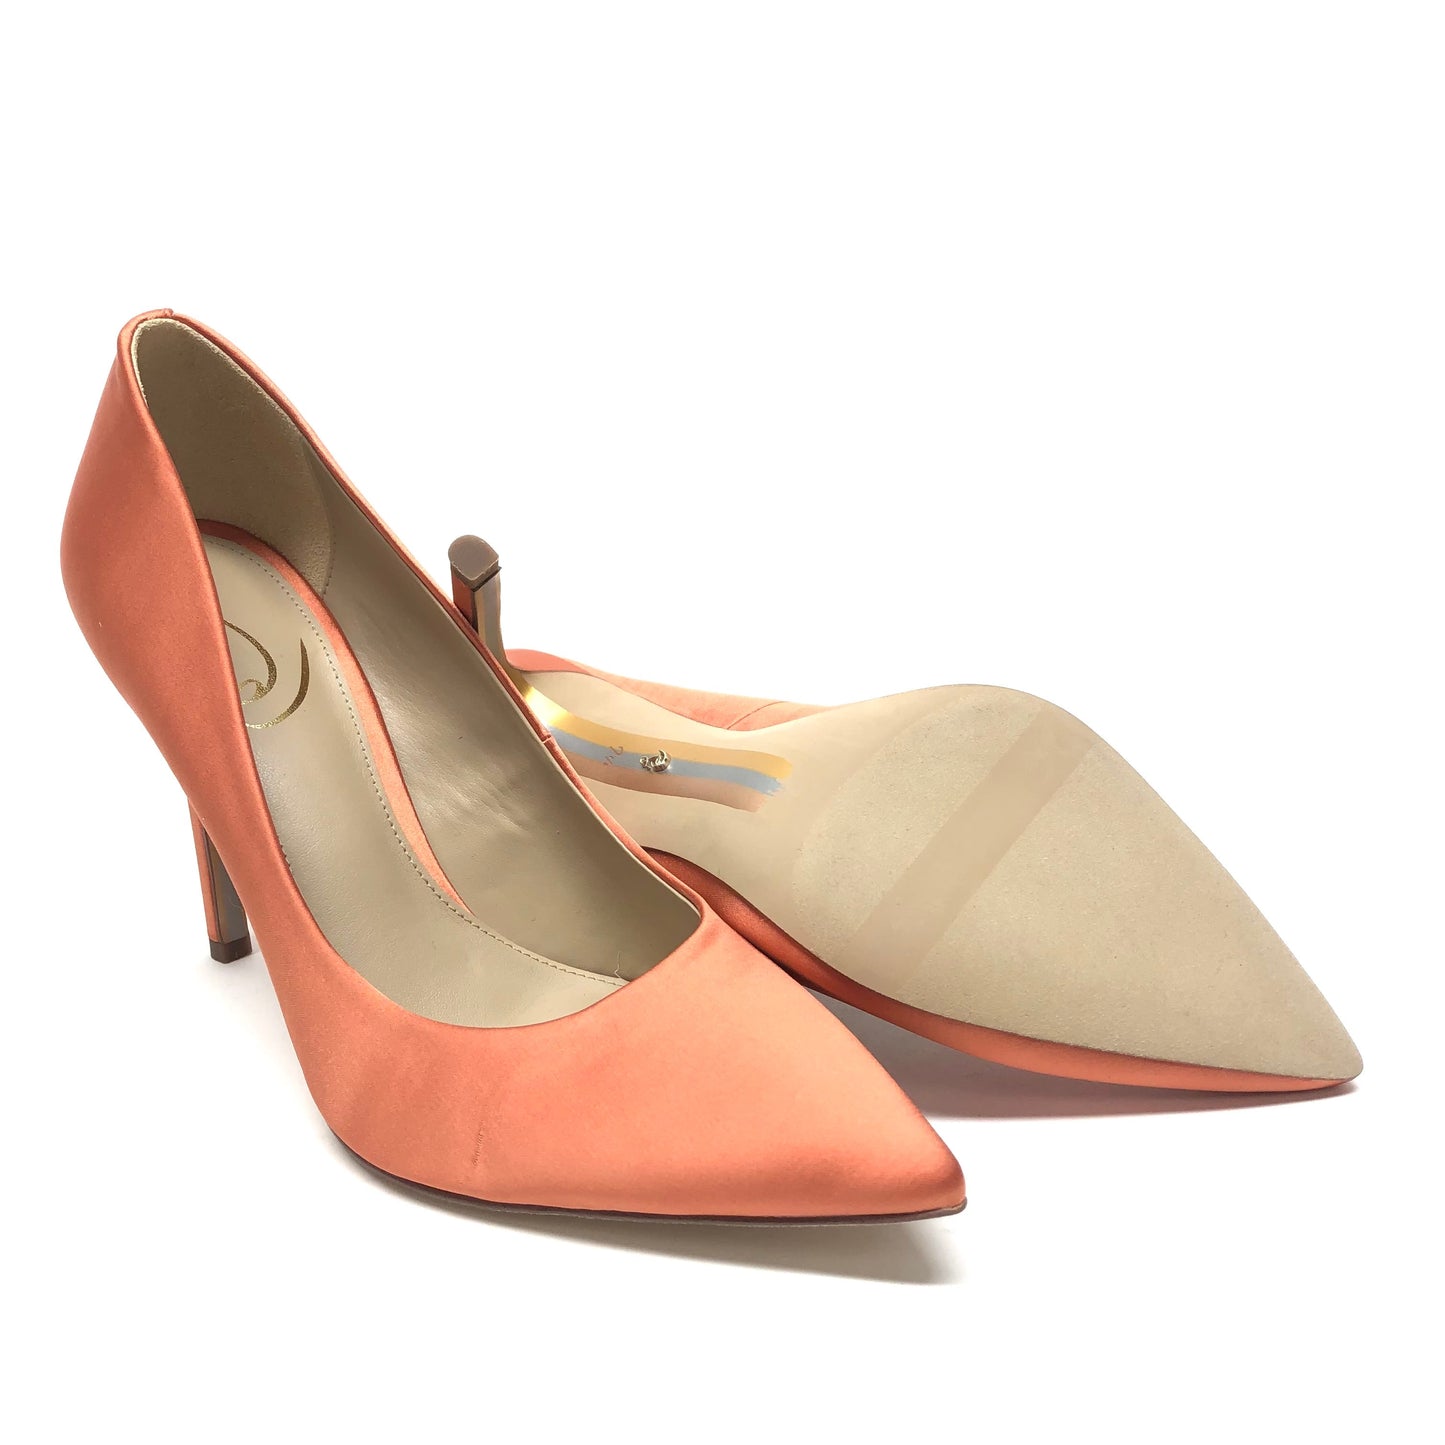 Orange Shoes Heels Stiletto Sam Edelman, Size 7.5